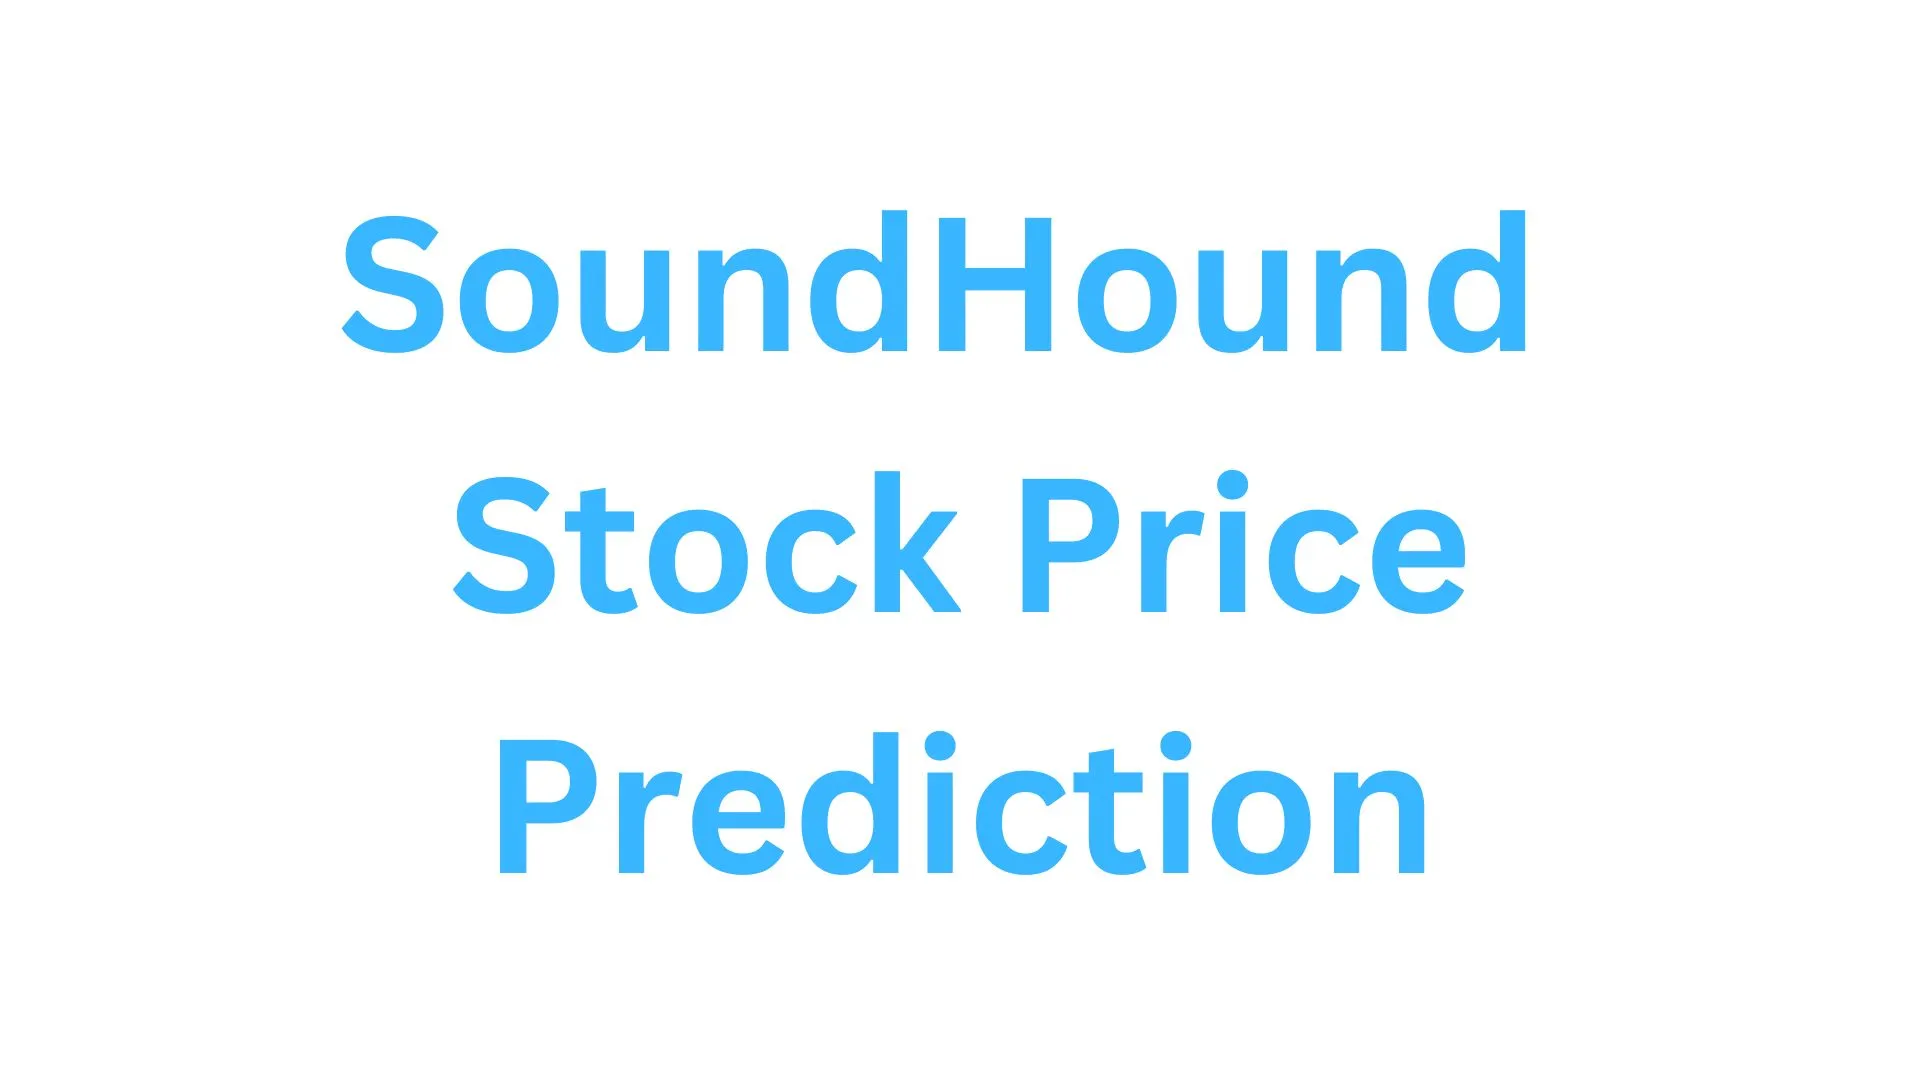 SoundHound Stock Price Prediction